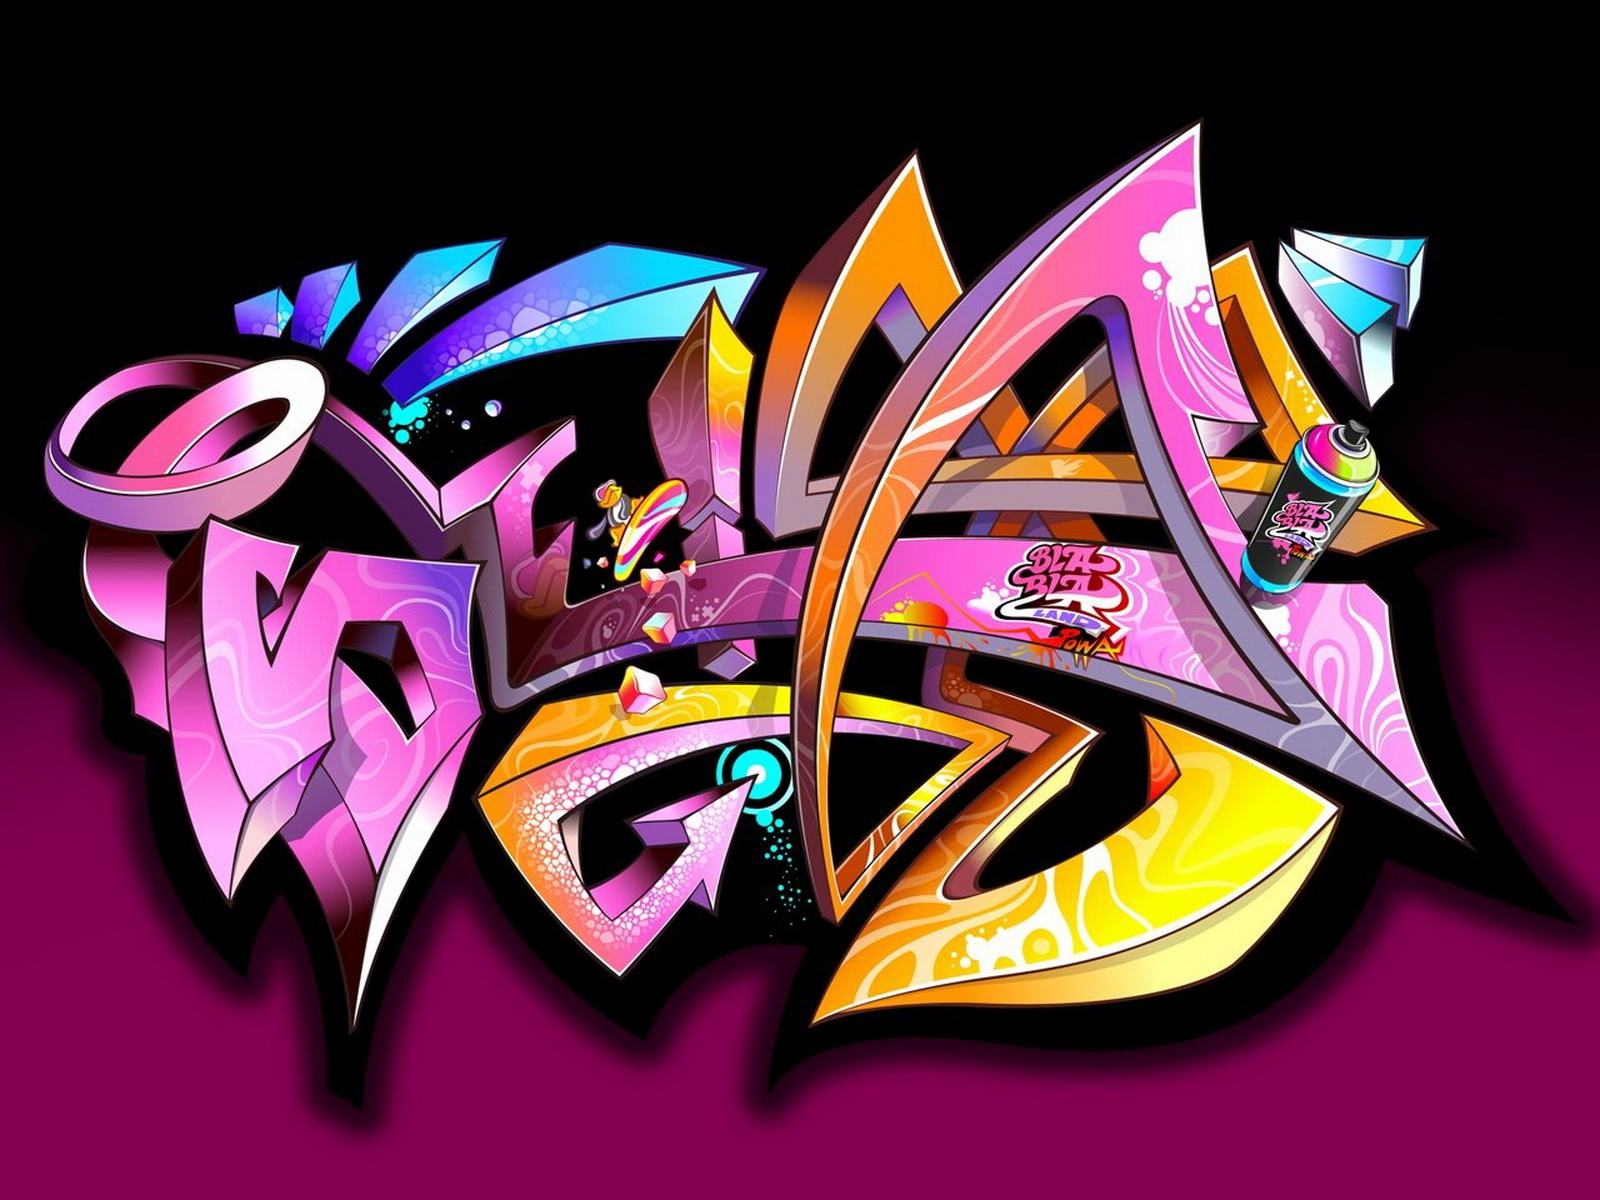 Free Download Download Graffiti Wallpaper Images For Laptop Amp Desktops 1600x1200 For Your Desktop Mobile Tablet Explore 76 Graffiti Backgrounds For Desktop Free Graffiti Wallpaper Hd Graffiti Desktop Wallpapers